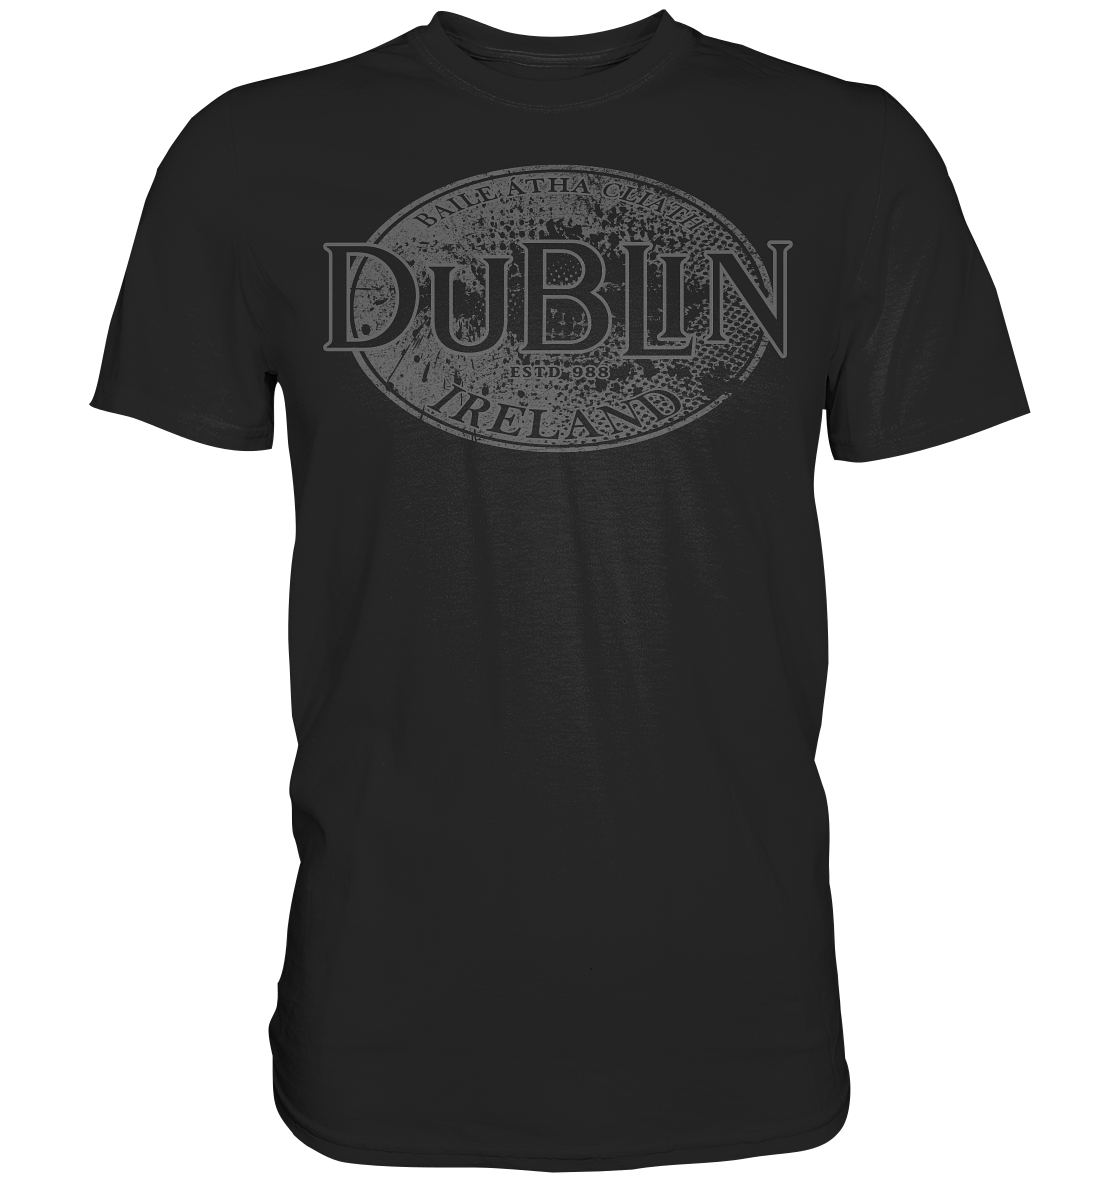 Dublin "Ireland / Baile Átha Cliath / Estd 988" - Premium Shirt